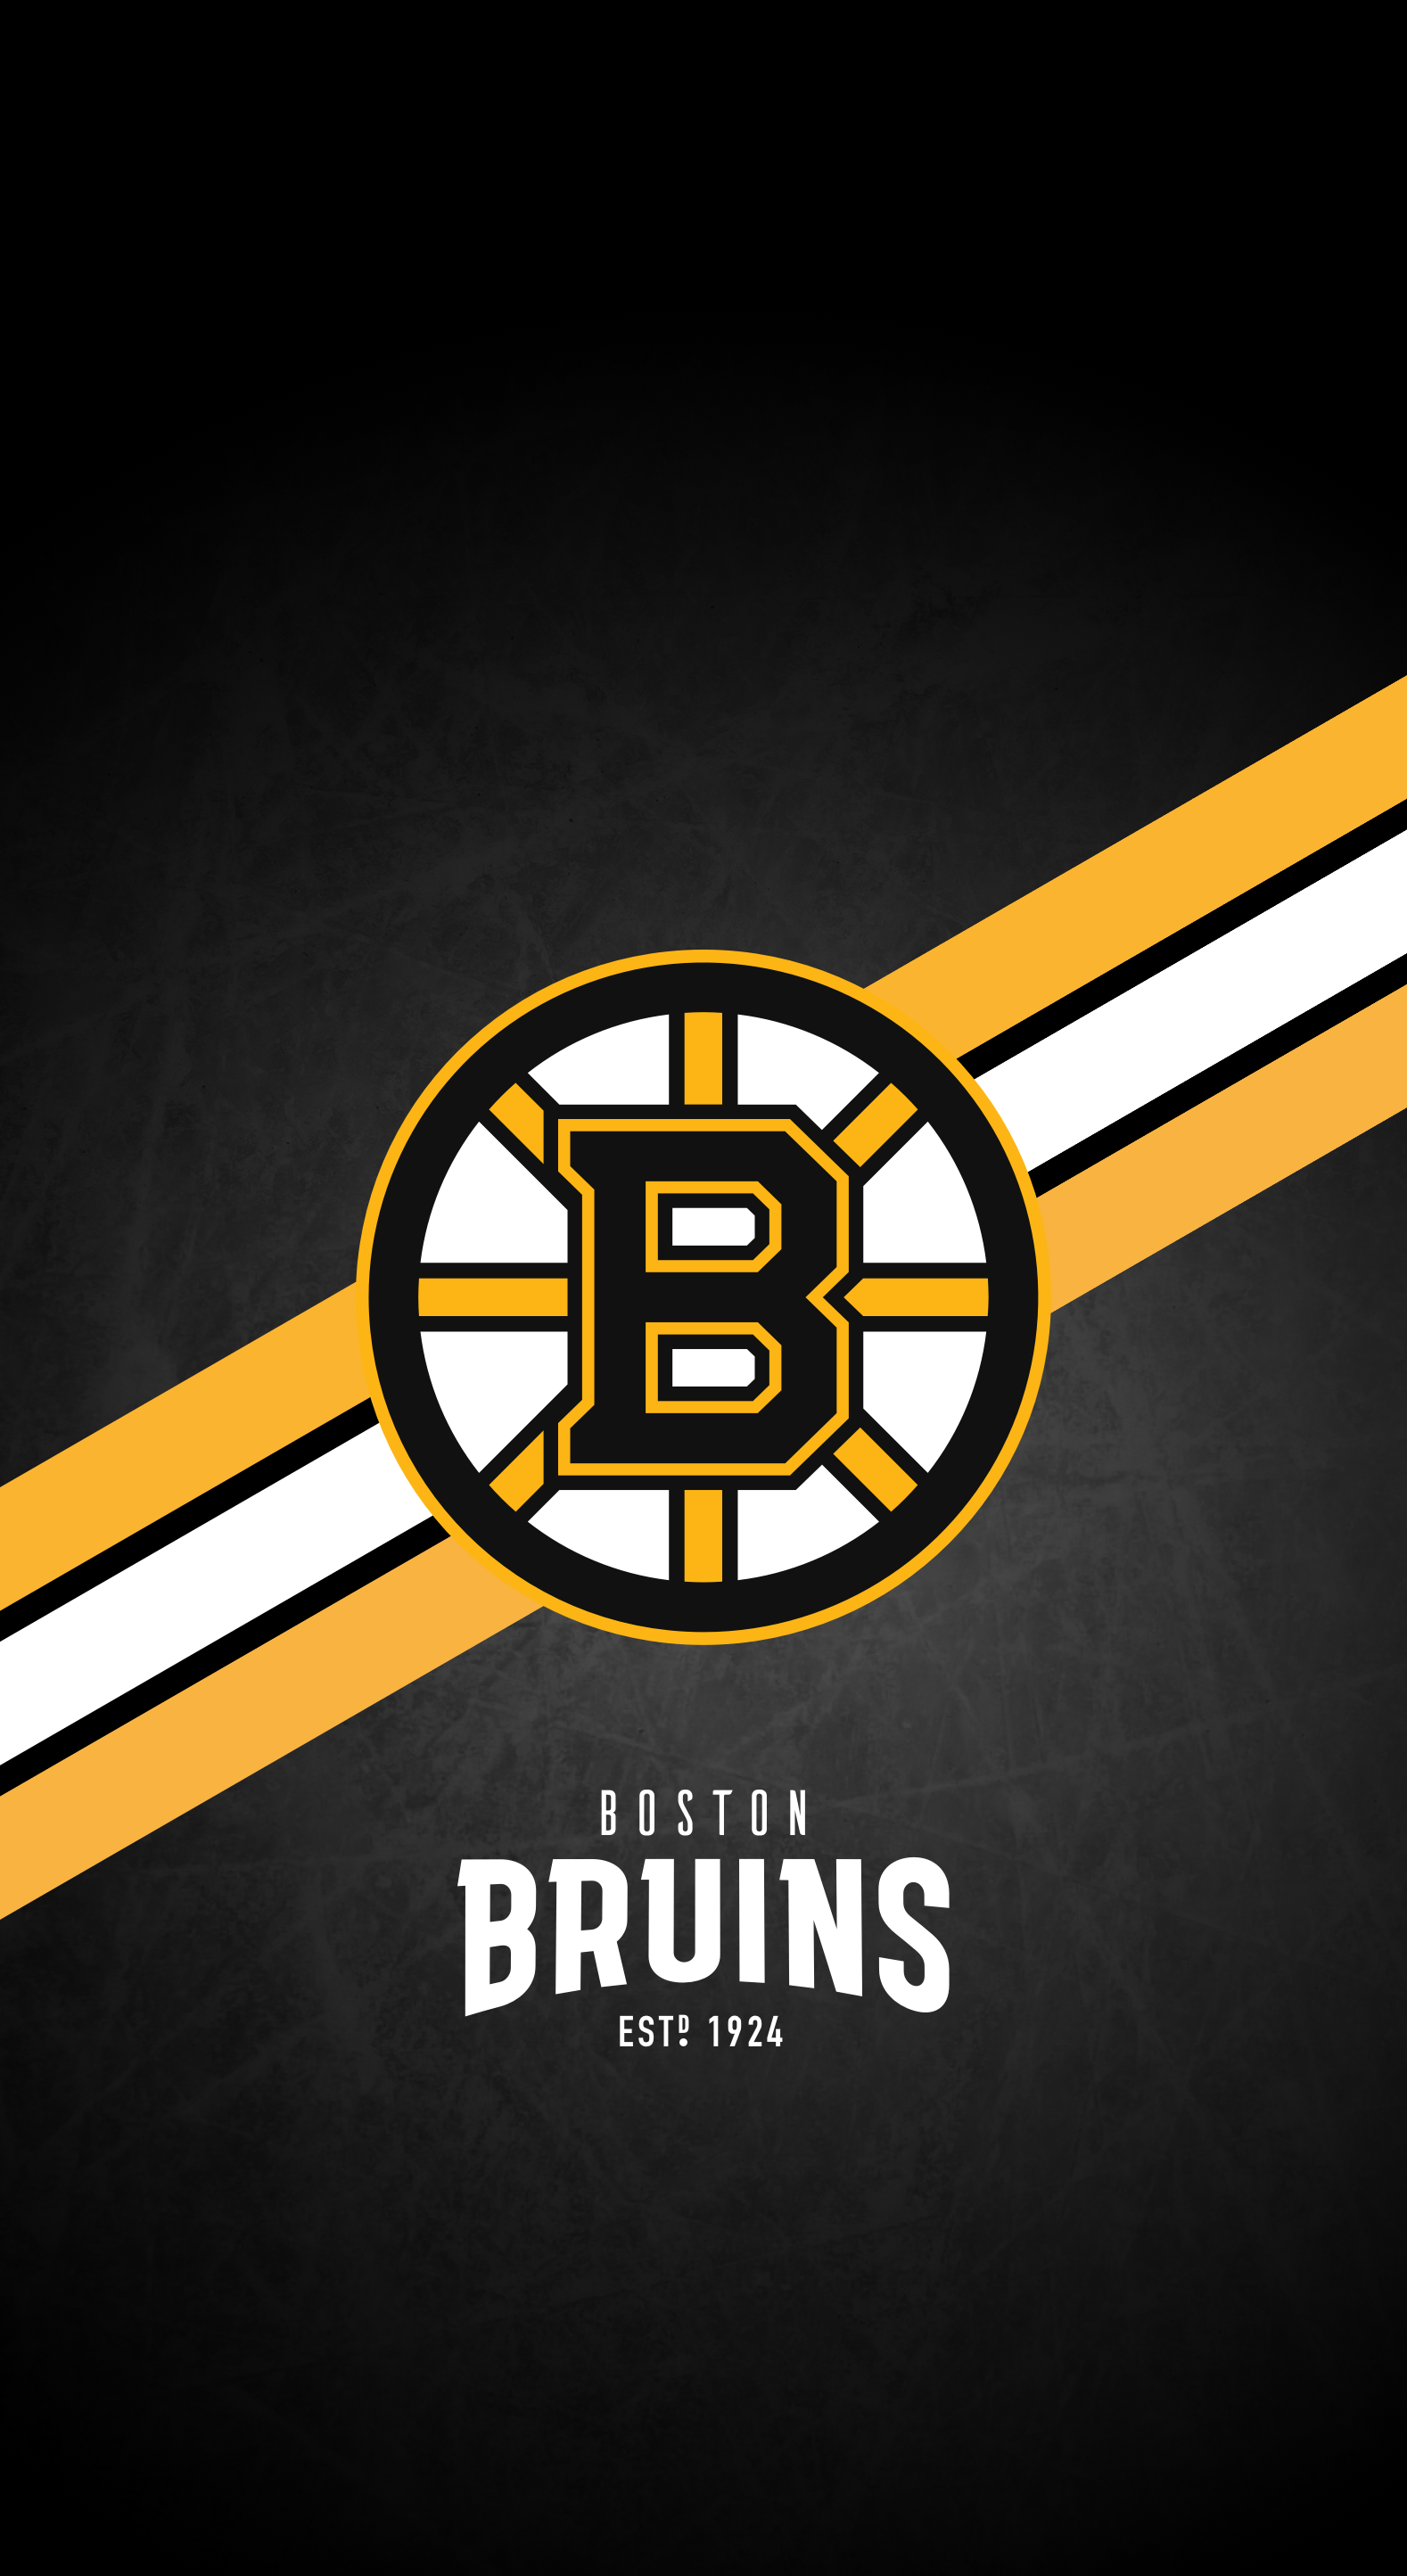 Boston Bruins wallpaper iphone